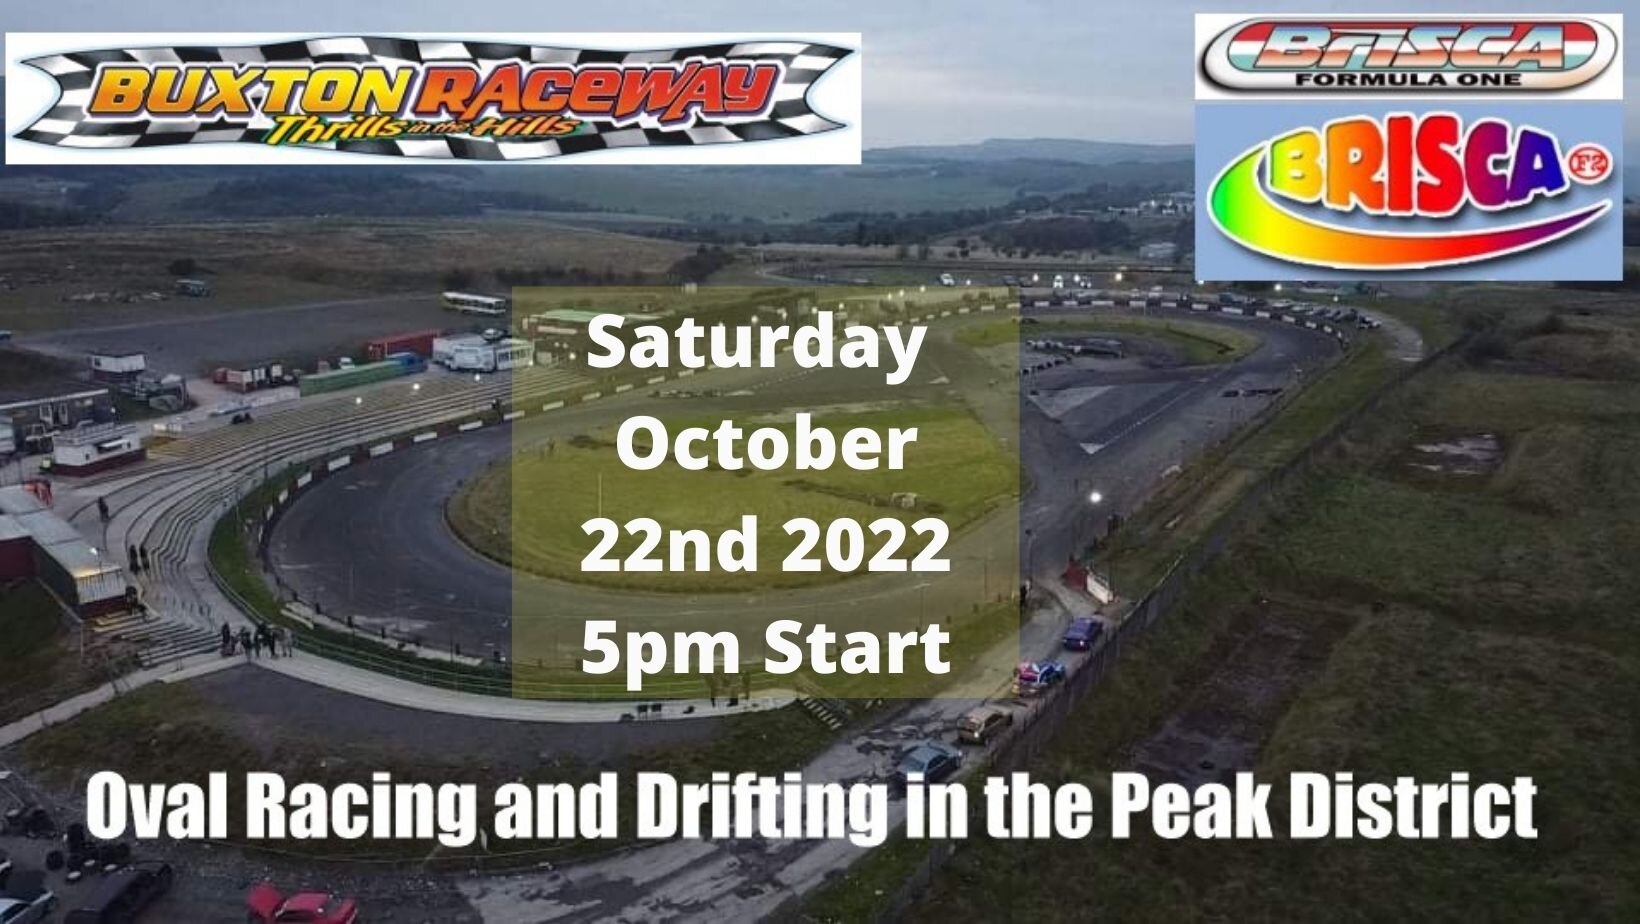 Buxton Raceway | Saturday 22nd October 5pm